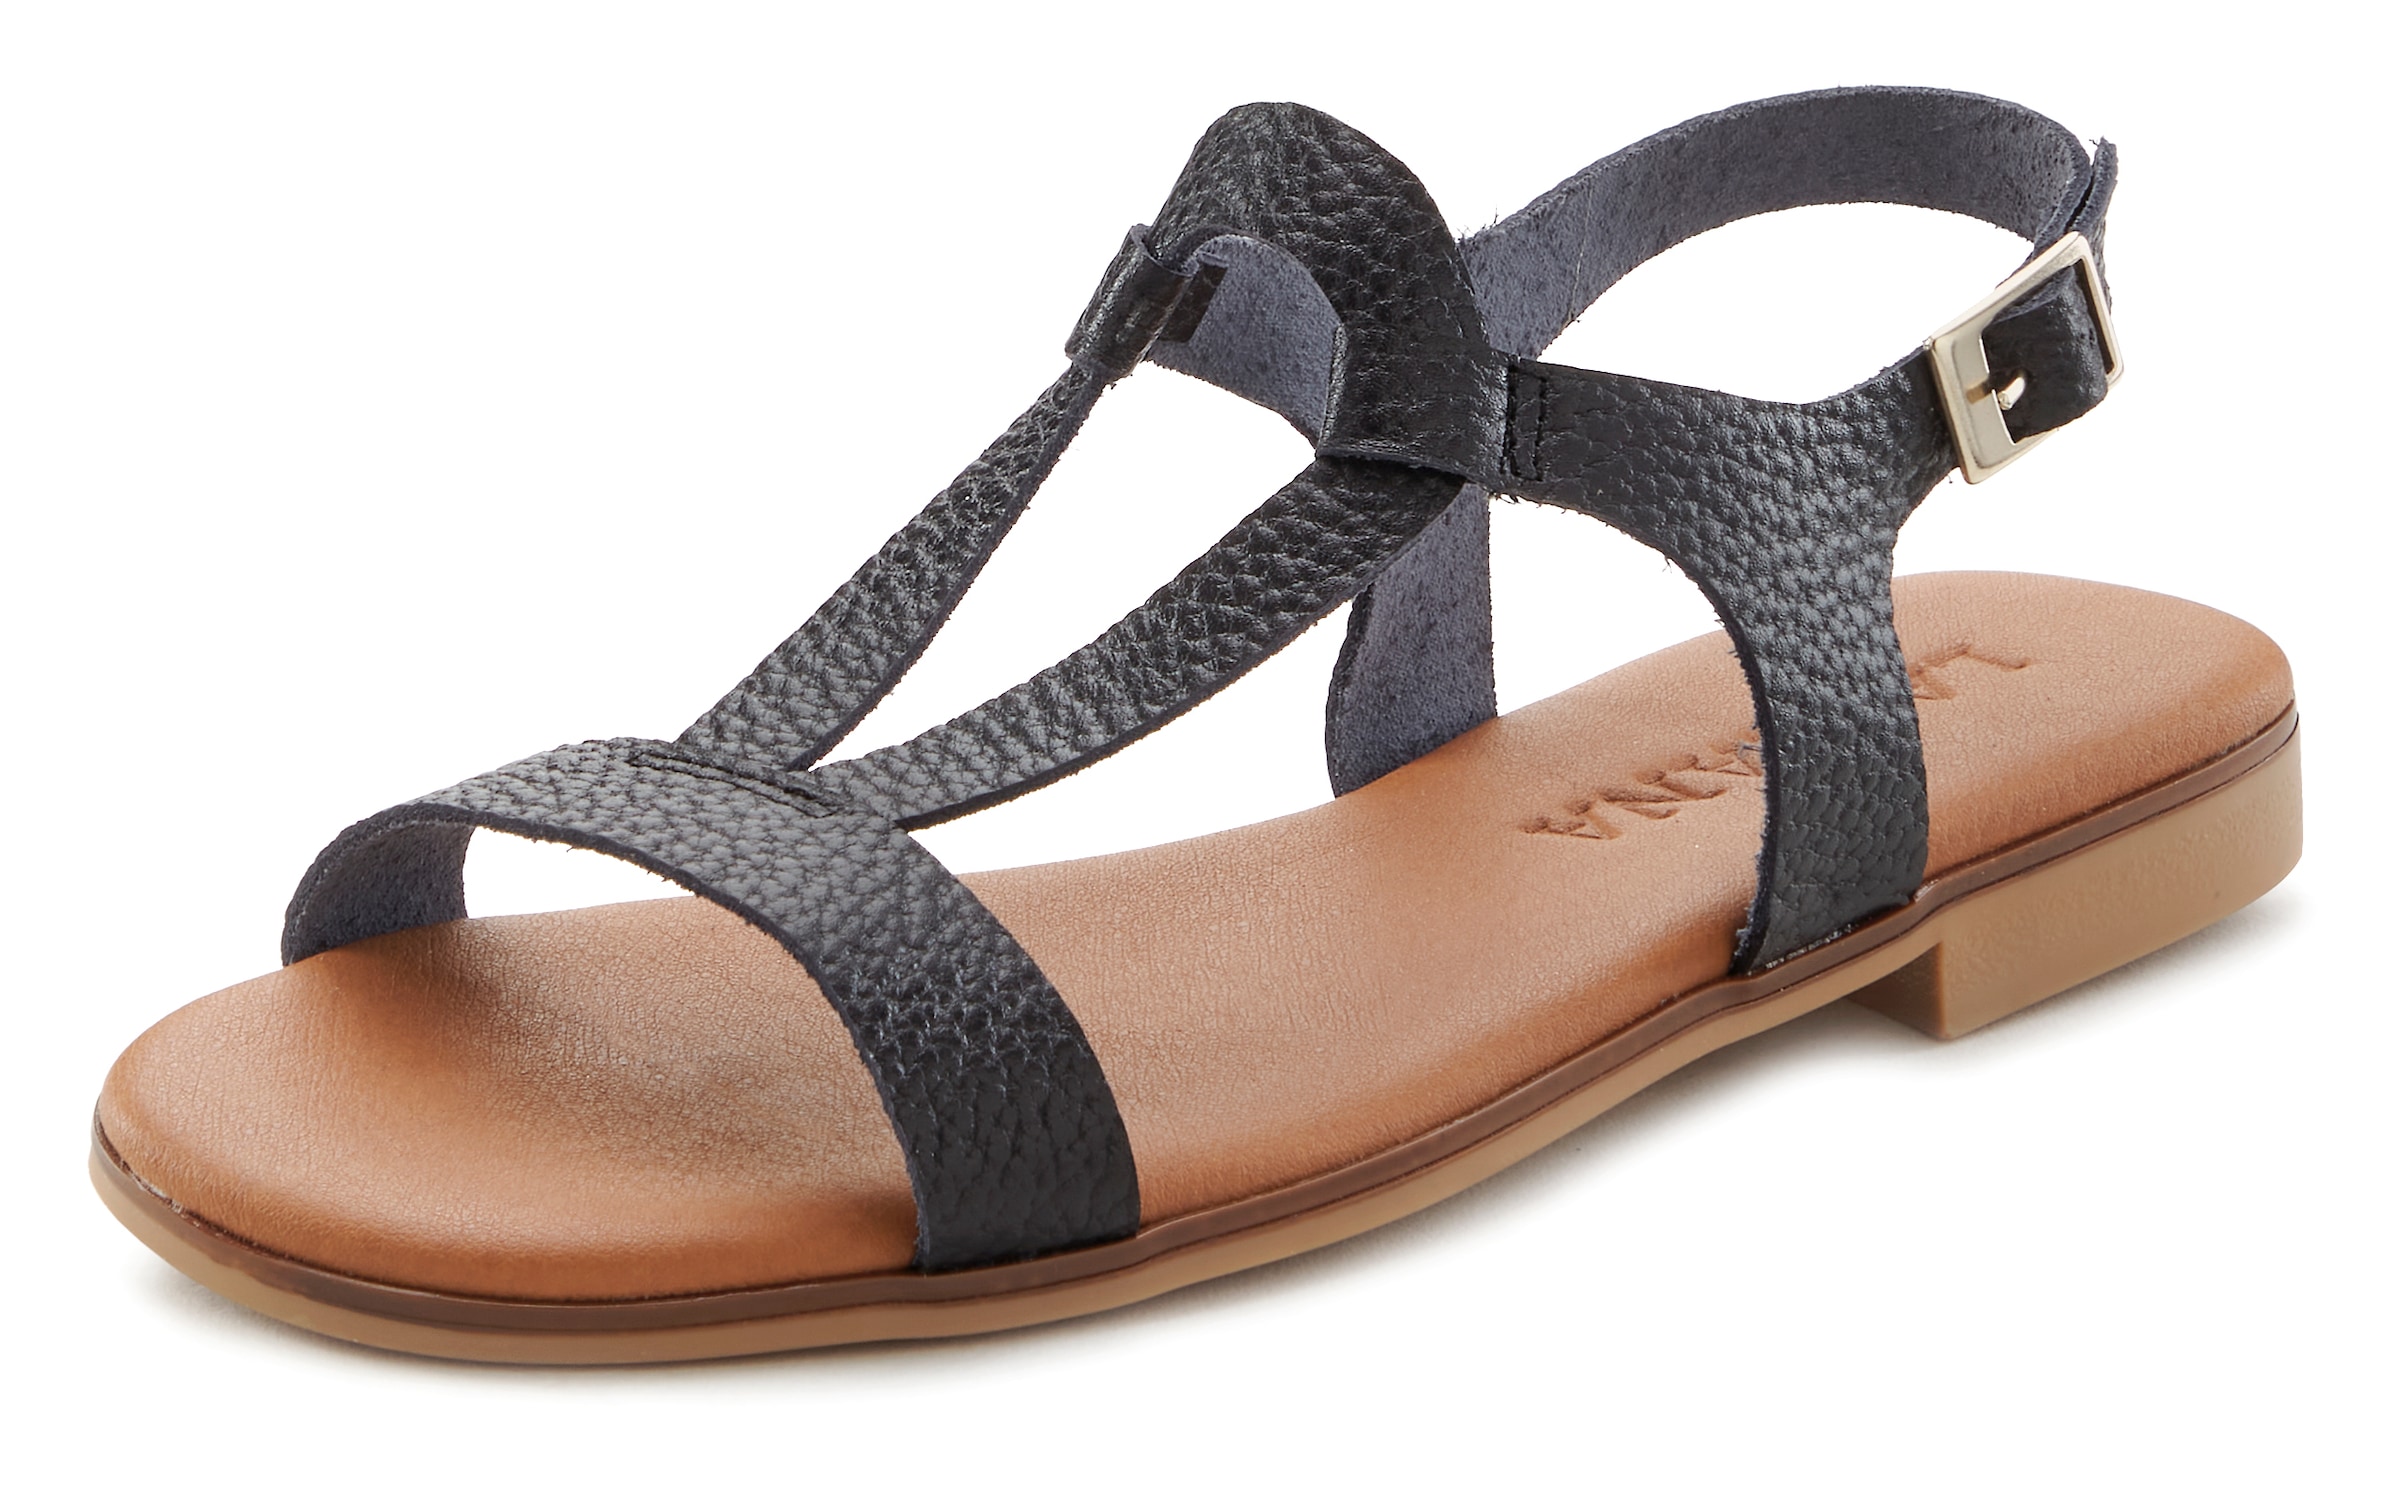 LASCANA Sandale, Sandalette, Sommerschuh aus hochwertigem Leder im Metallic-Look